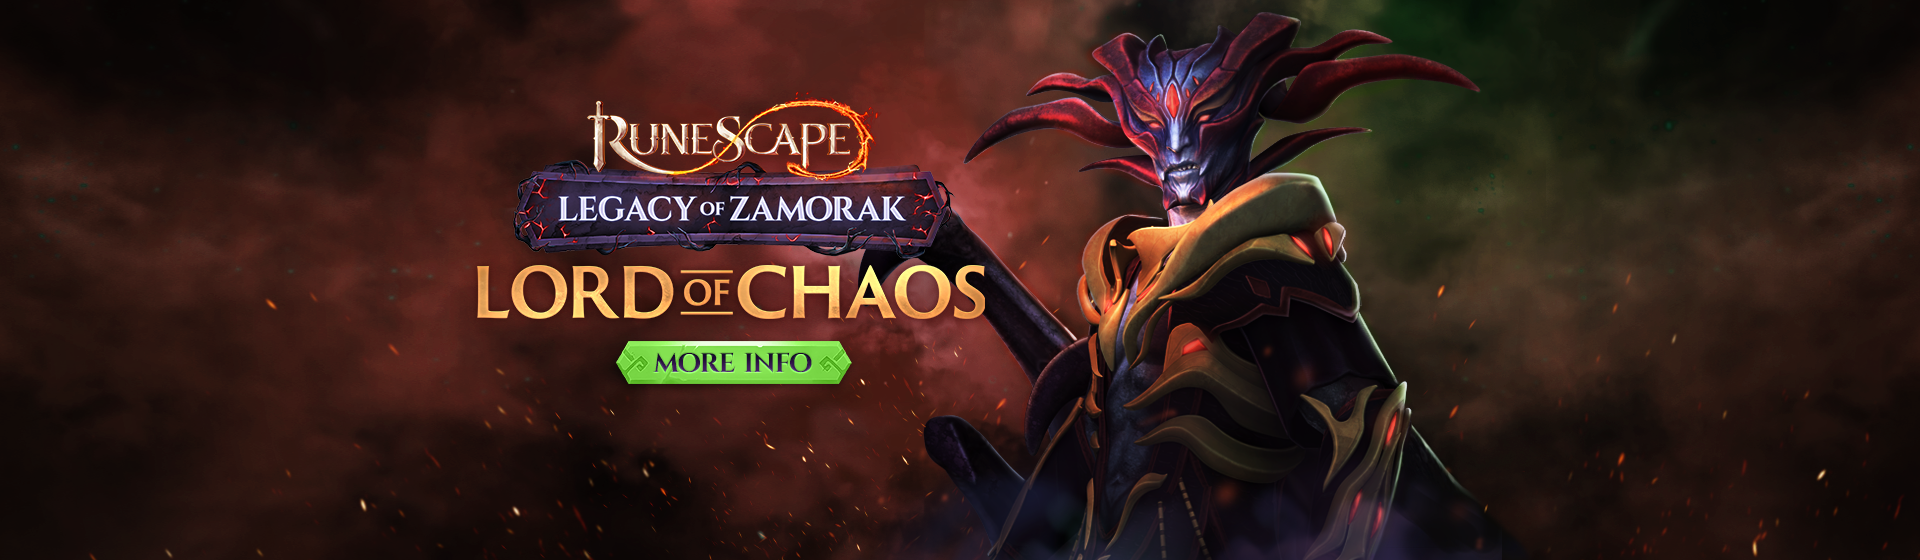 Zamorak Lord of Chaos